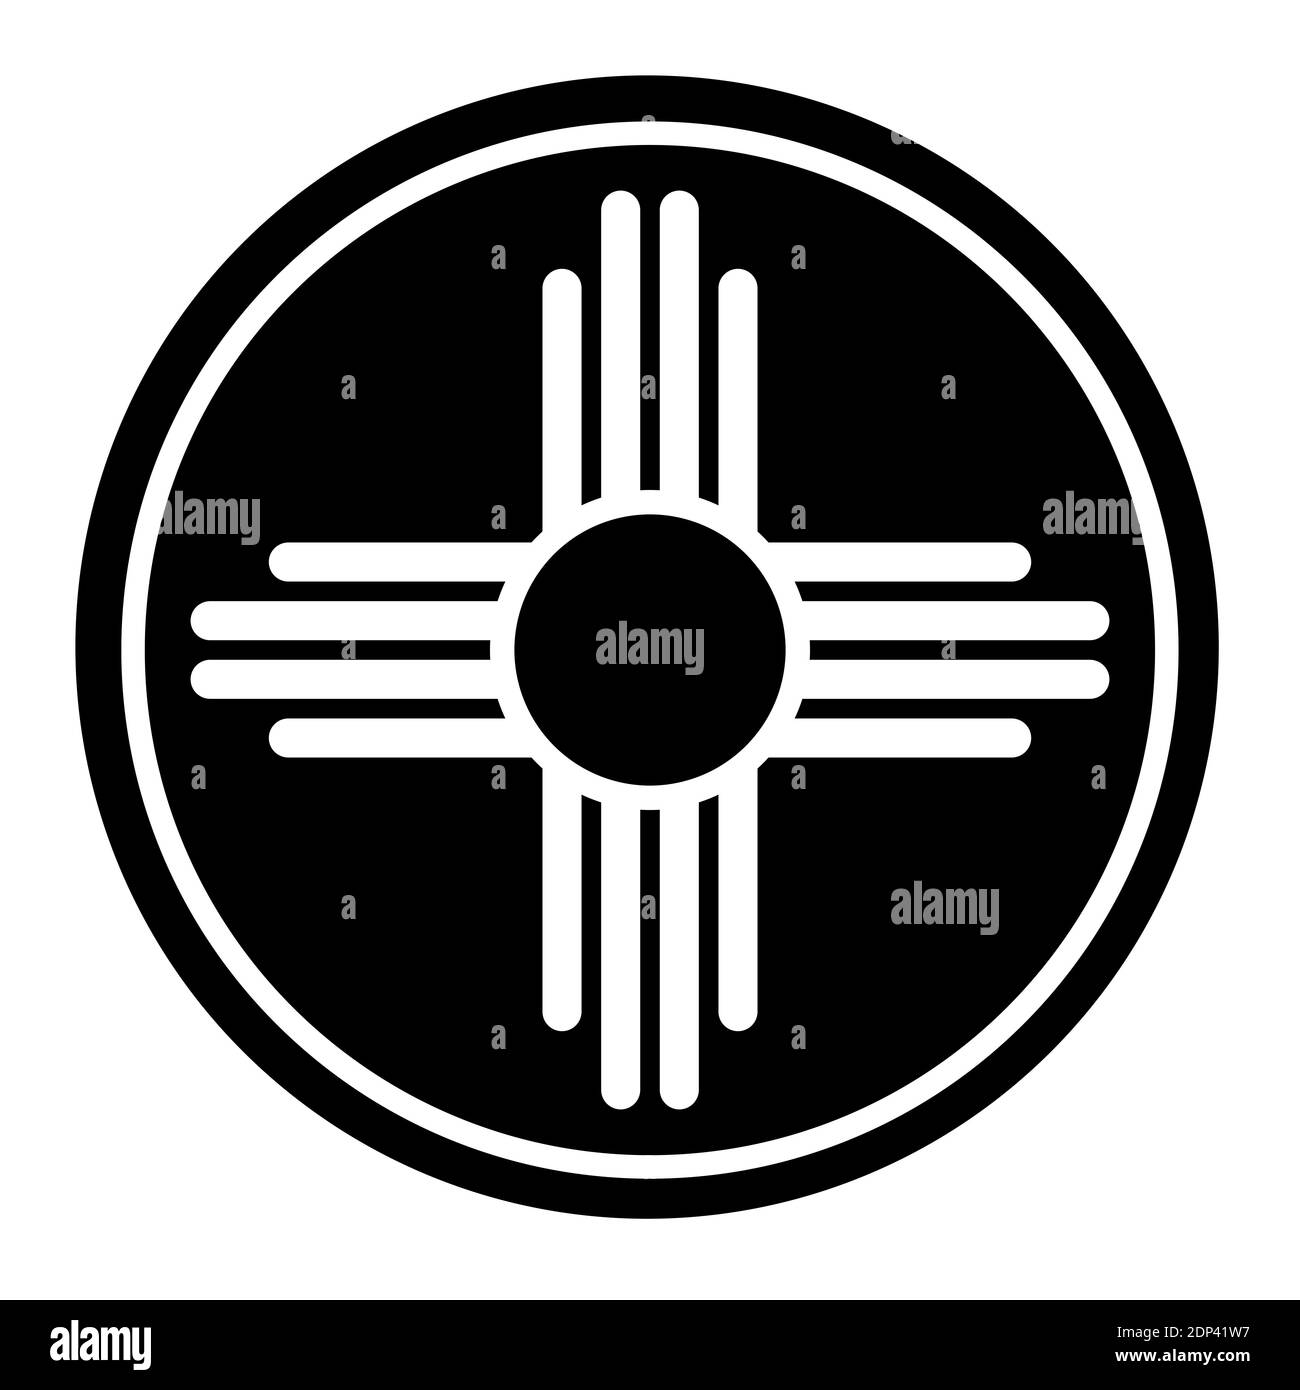 Native american sun symbol in a black circle Stock Photo